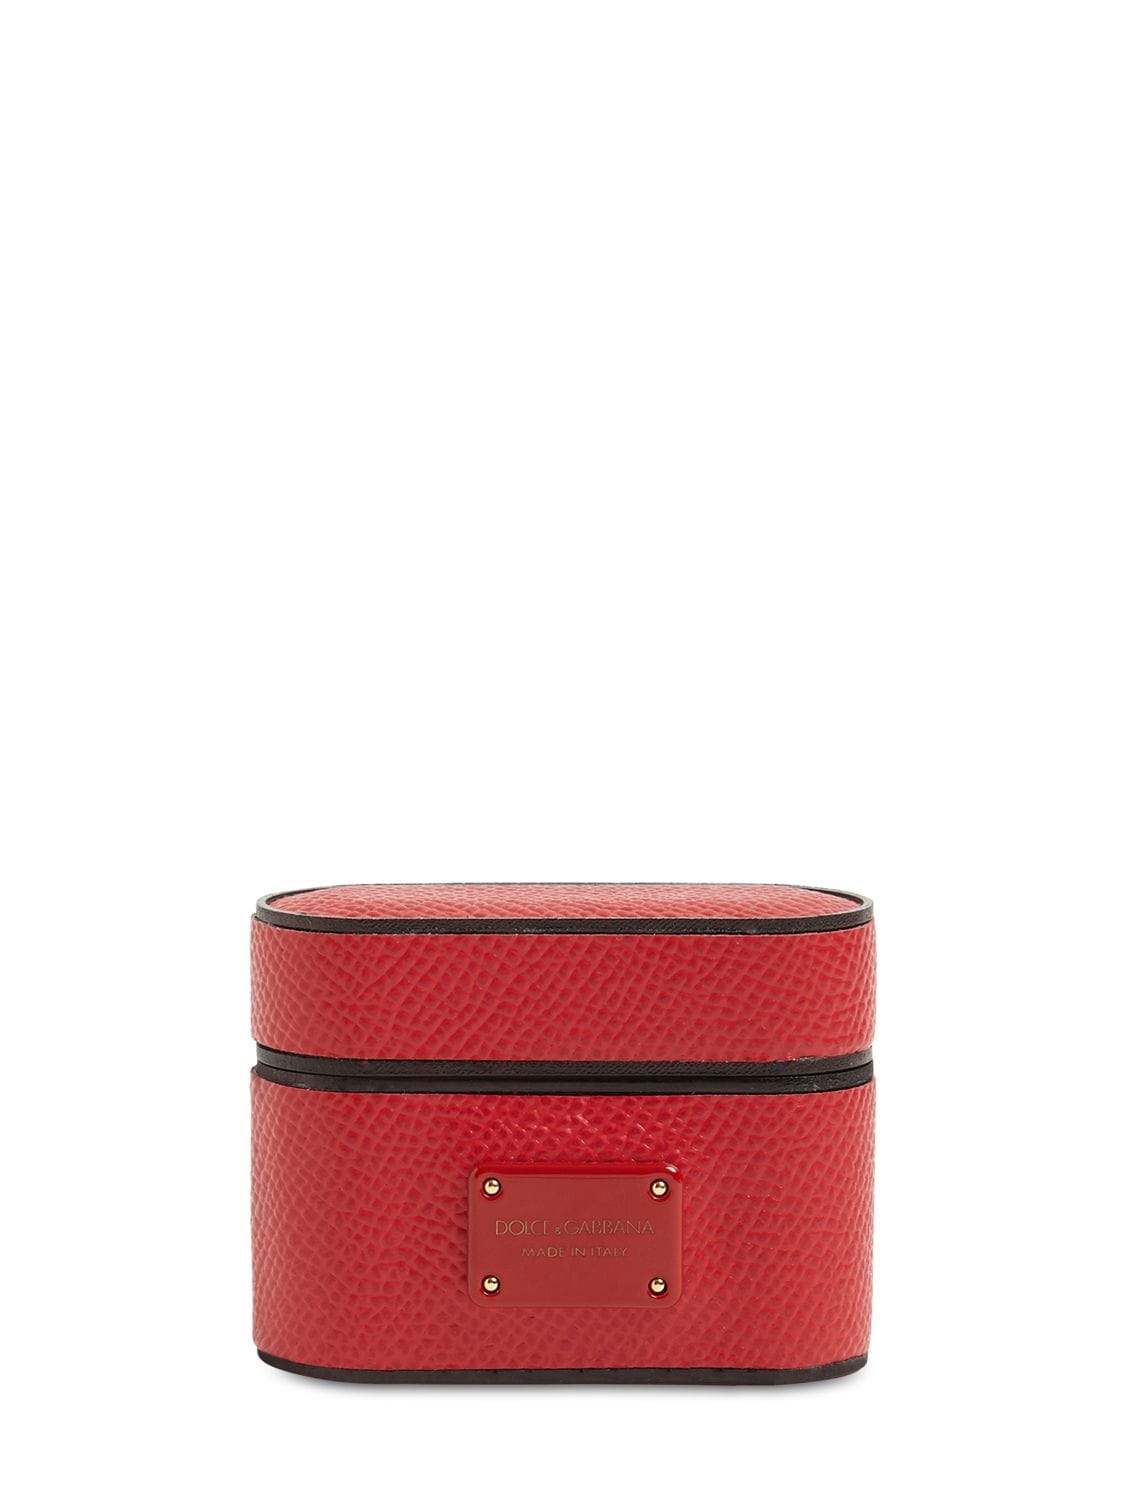 Dolce & Gabbana 压纹皮革airpods Pro保护套 In Red